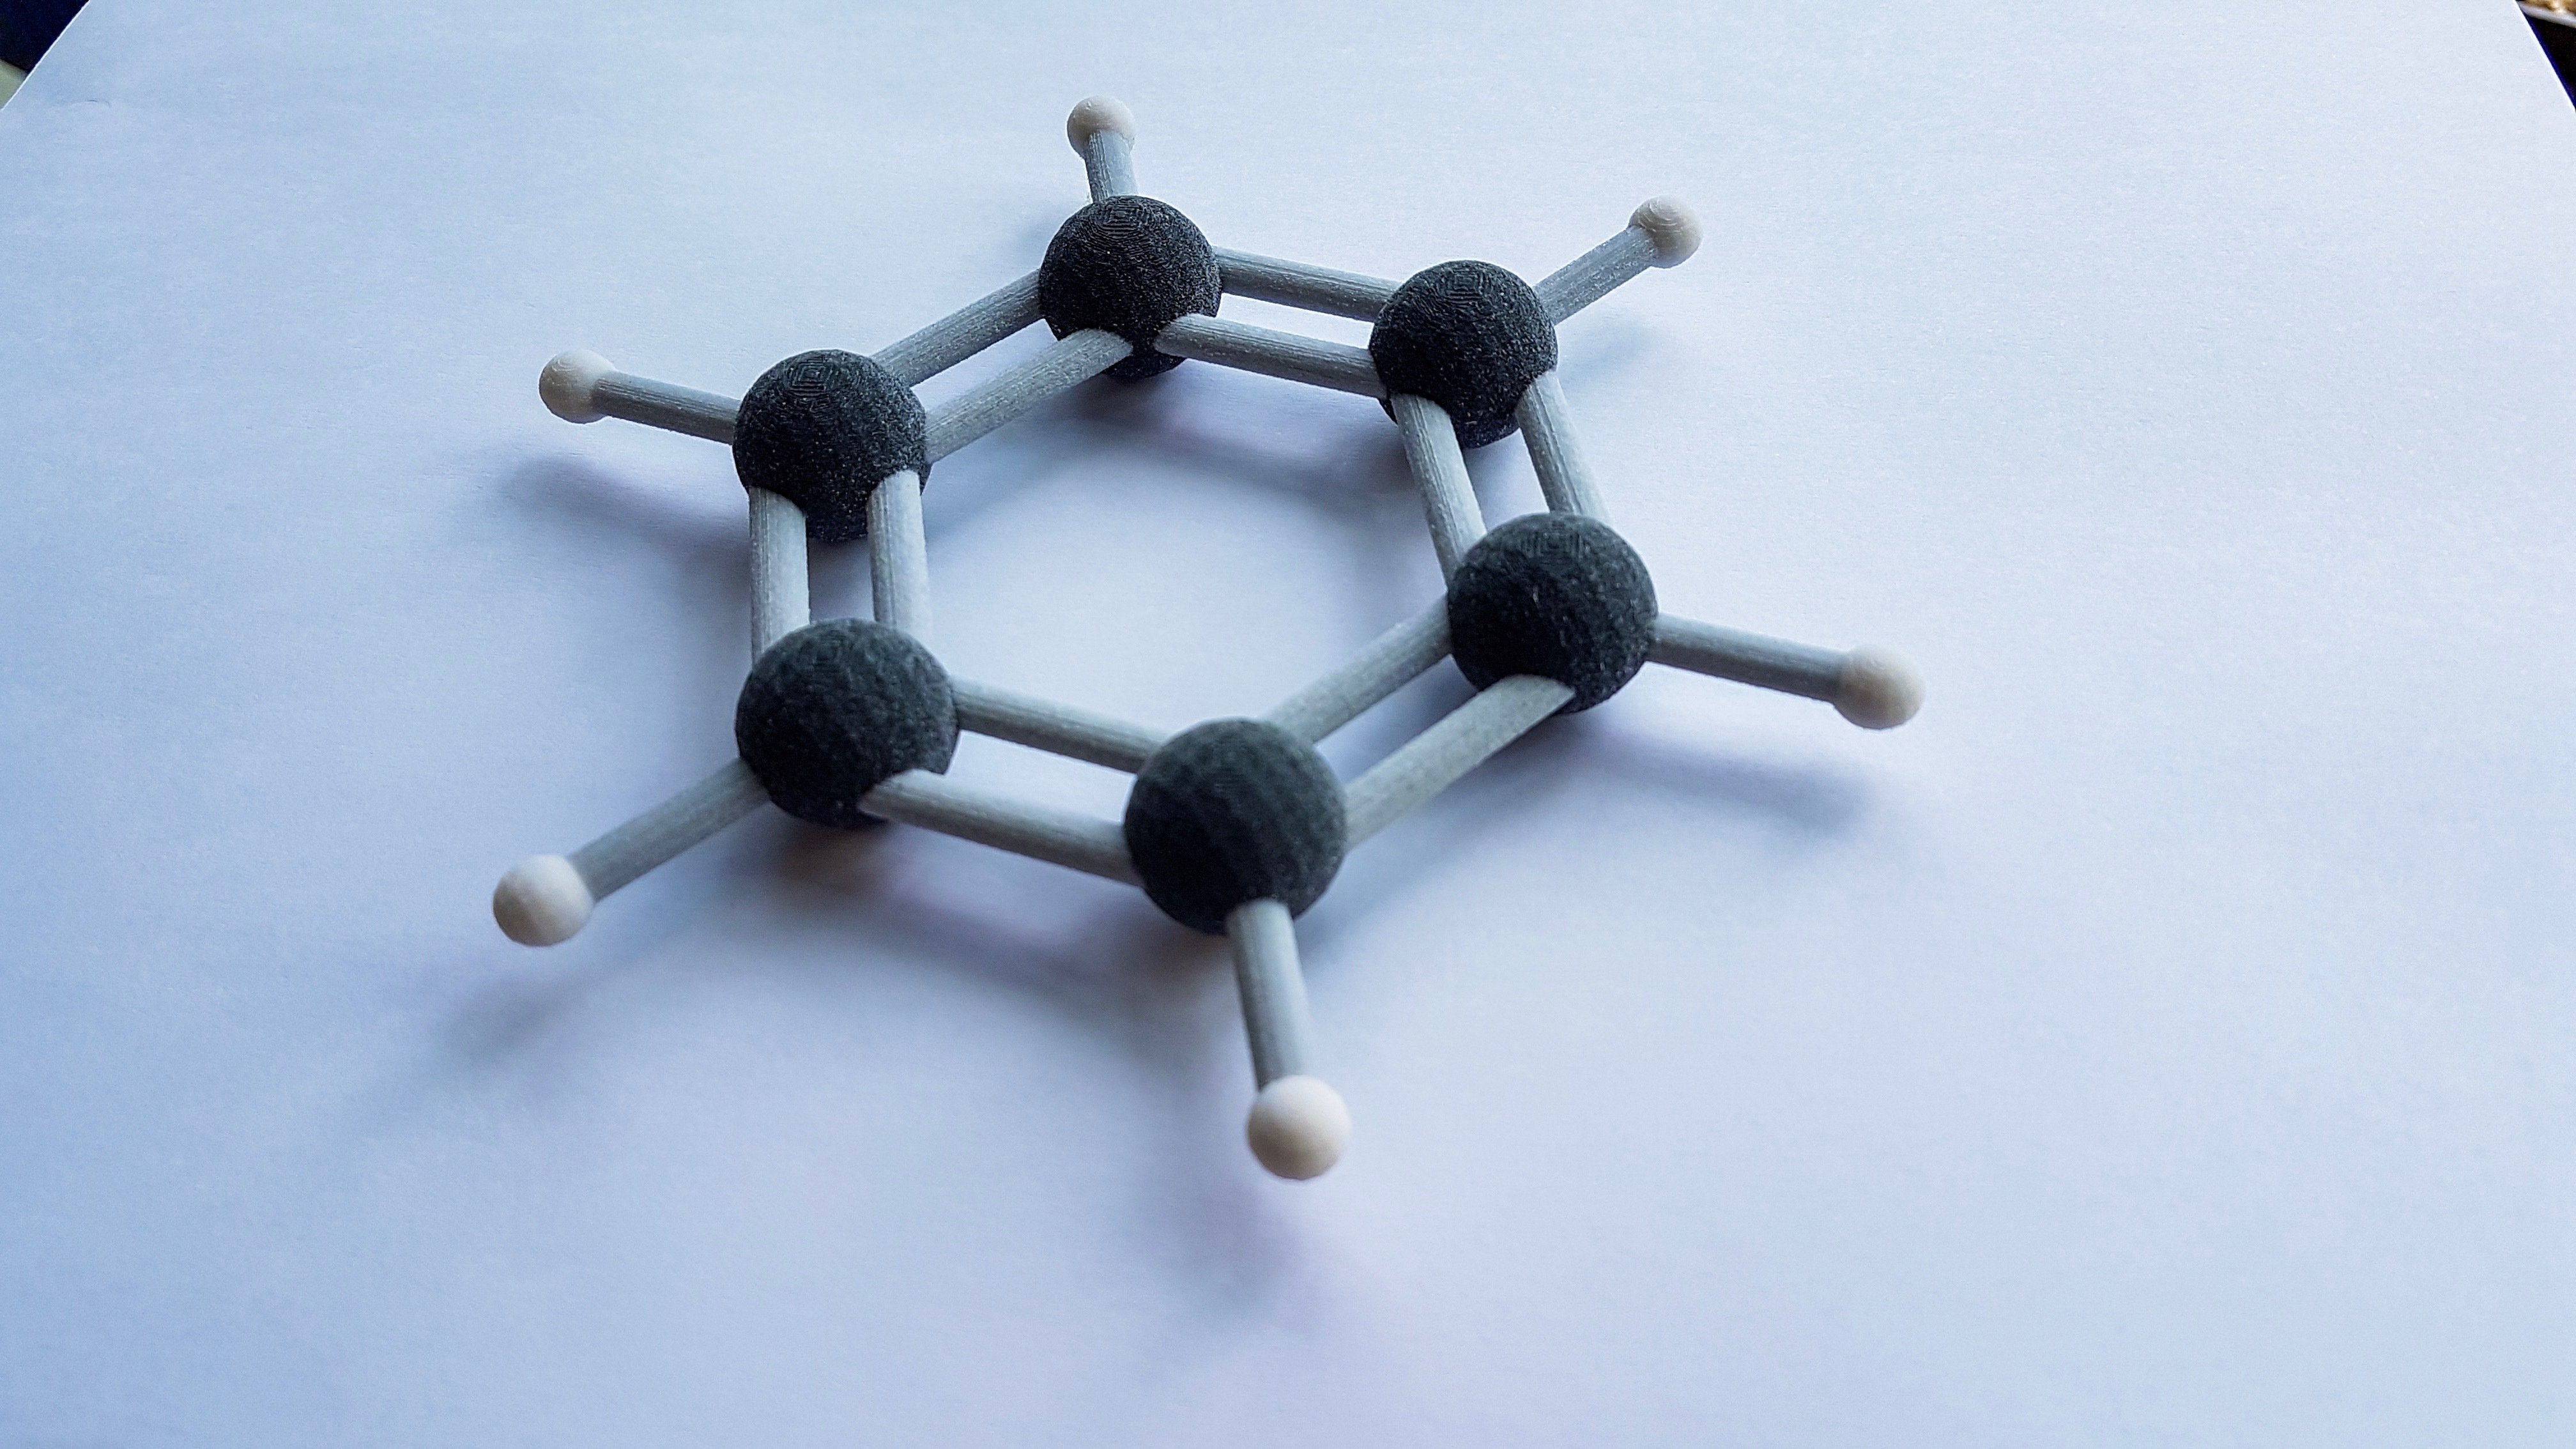 Поделки молекула из пластилина идеи по изготовлению своими руками фото